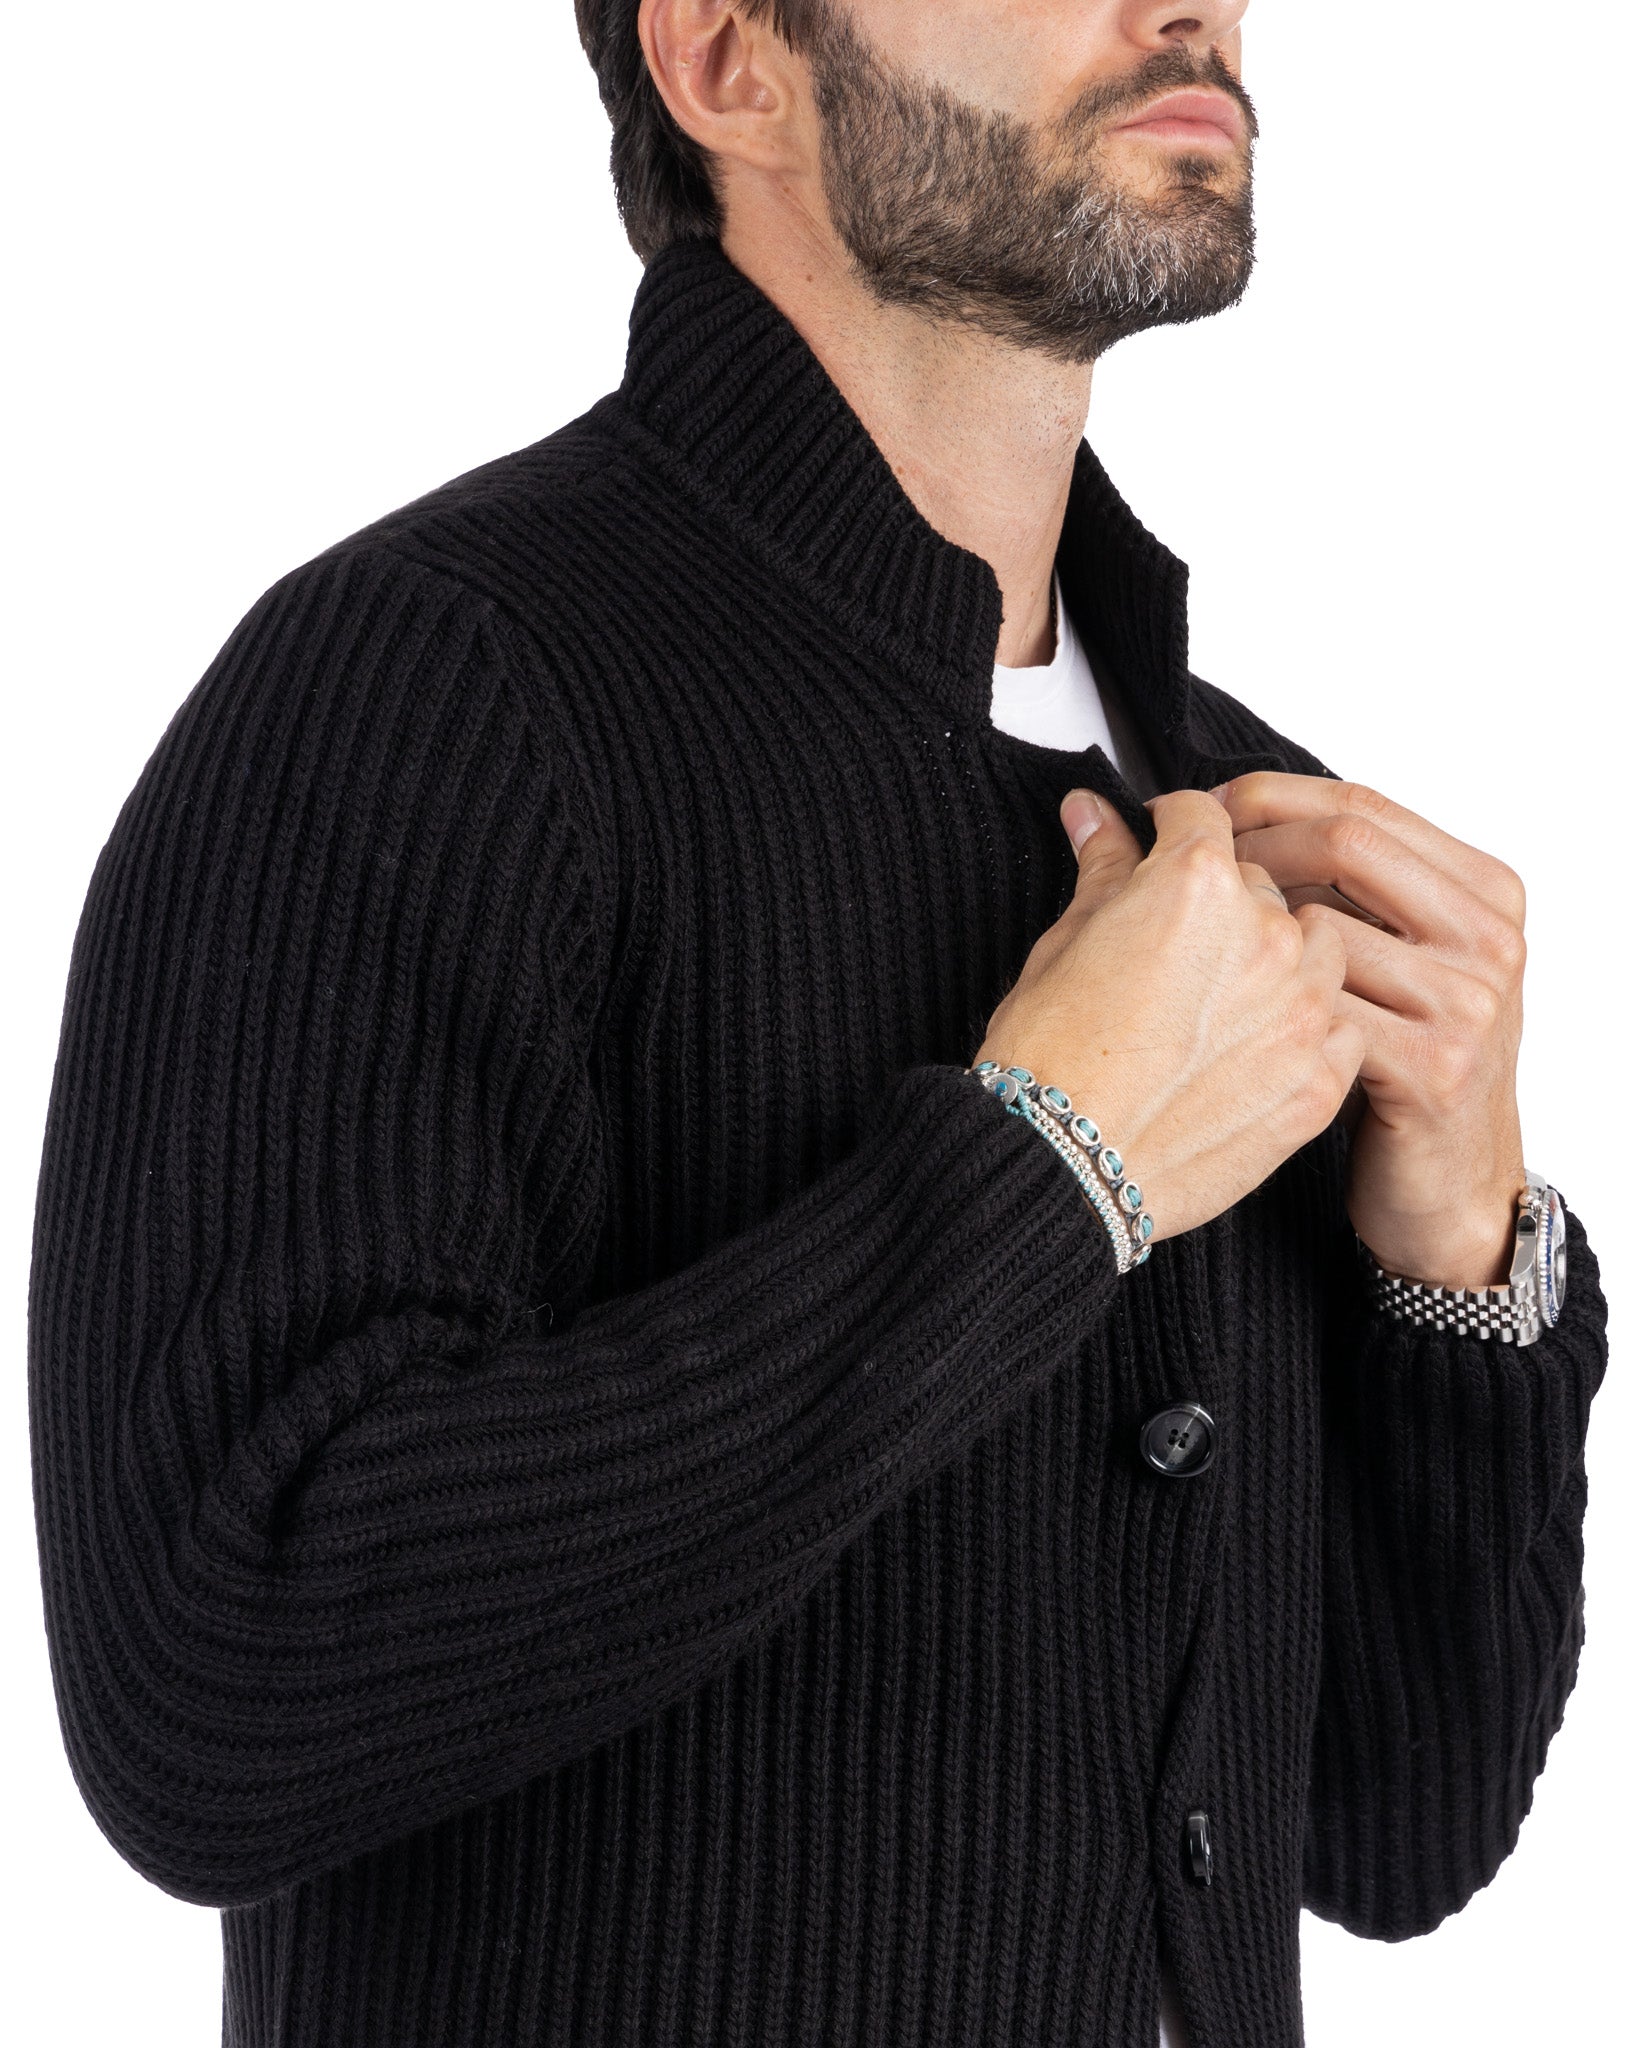 Richard - black ribbed knit cardigan